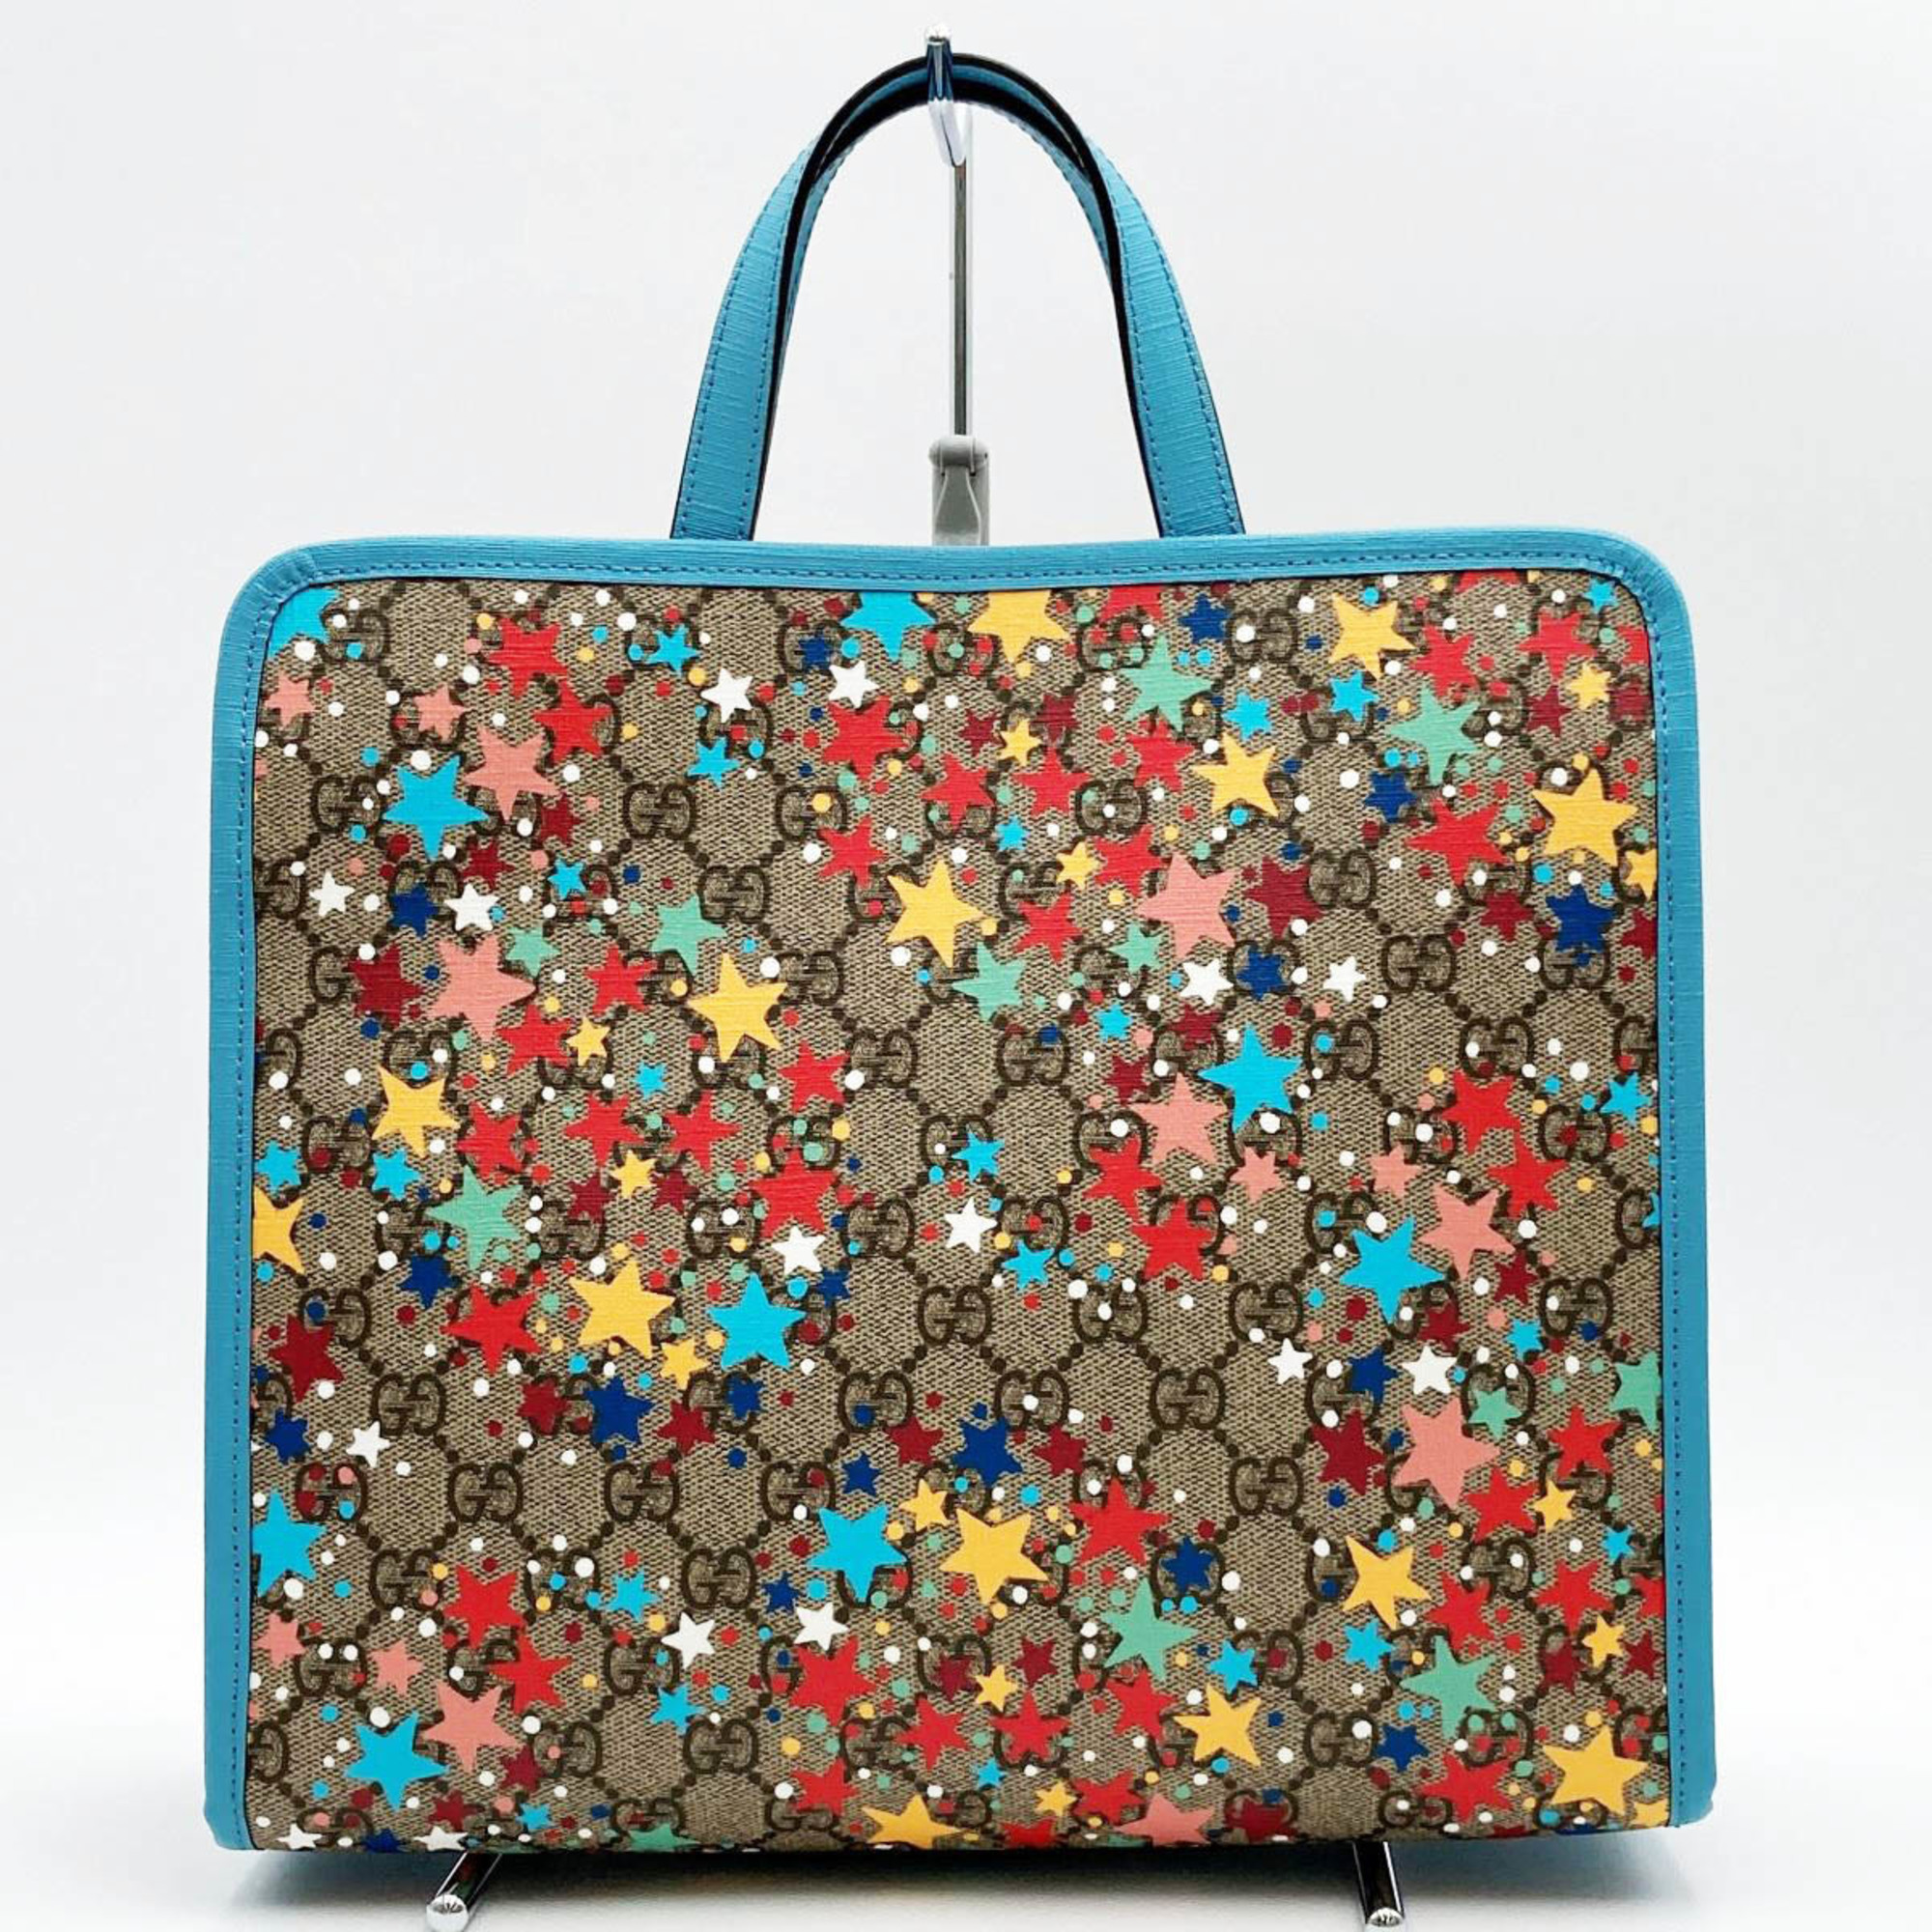 GUCCI Gucci GG Supreme Star Tote Bag Handbag Light Blue x Beige Pattern Print Ladies 605614